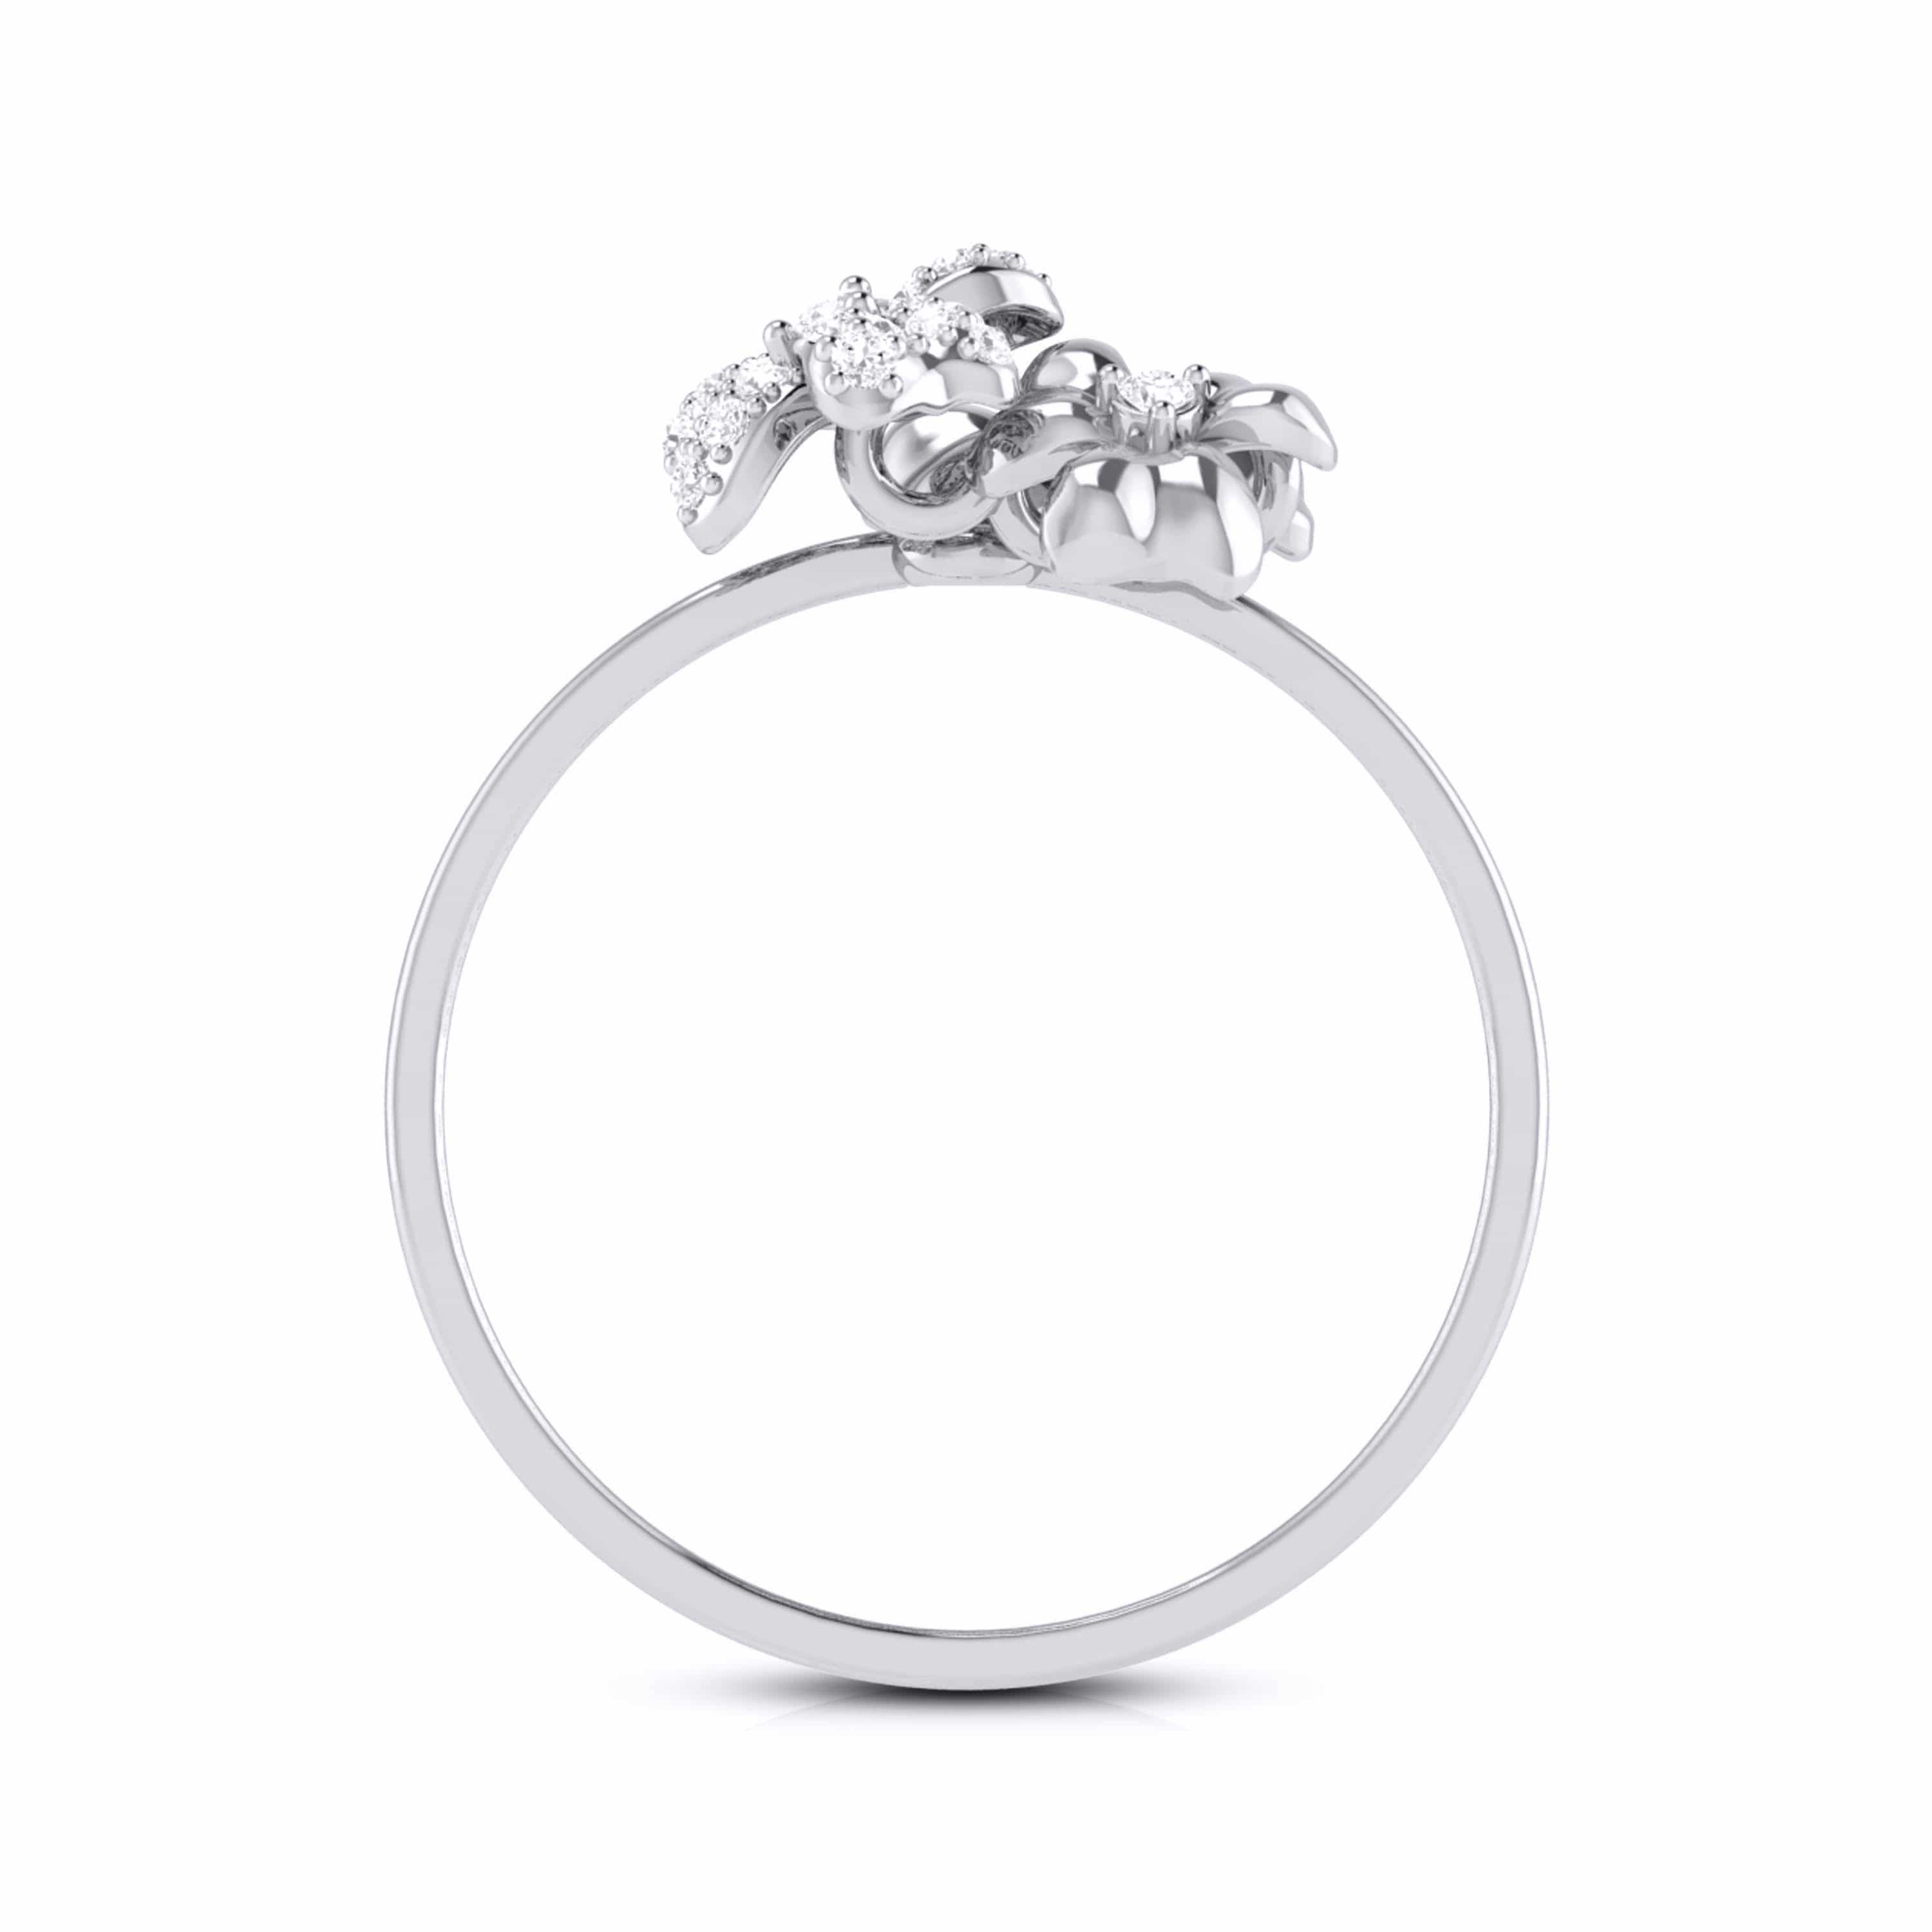 Daesar Platinum Ring Women and Men Couple Rings Engraved Simple Round Jewellery  Rings Diamond White Gold Rings Women Size 5 & Men Size 10|Amazon.com